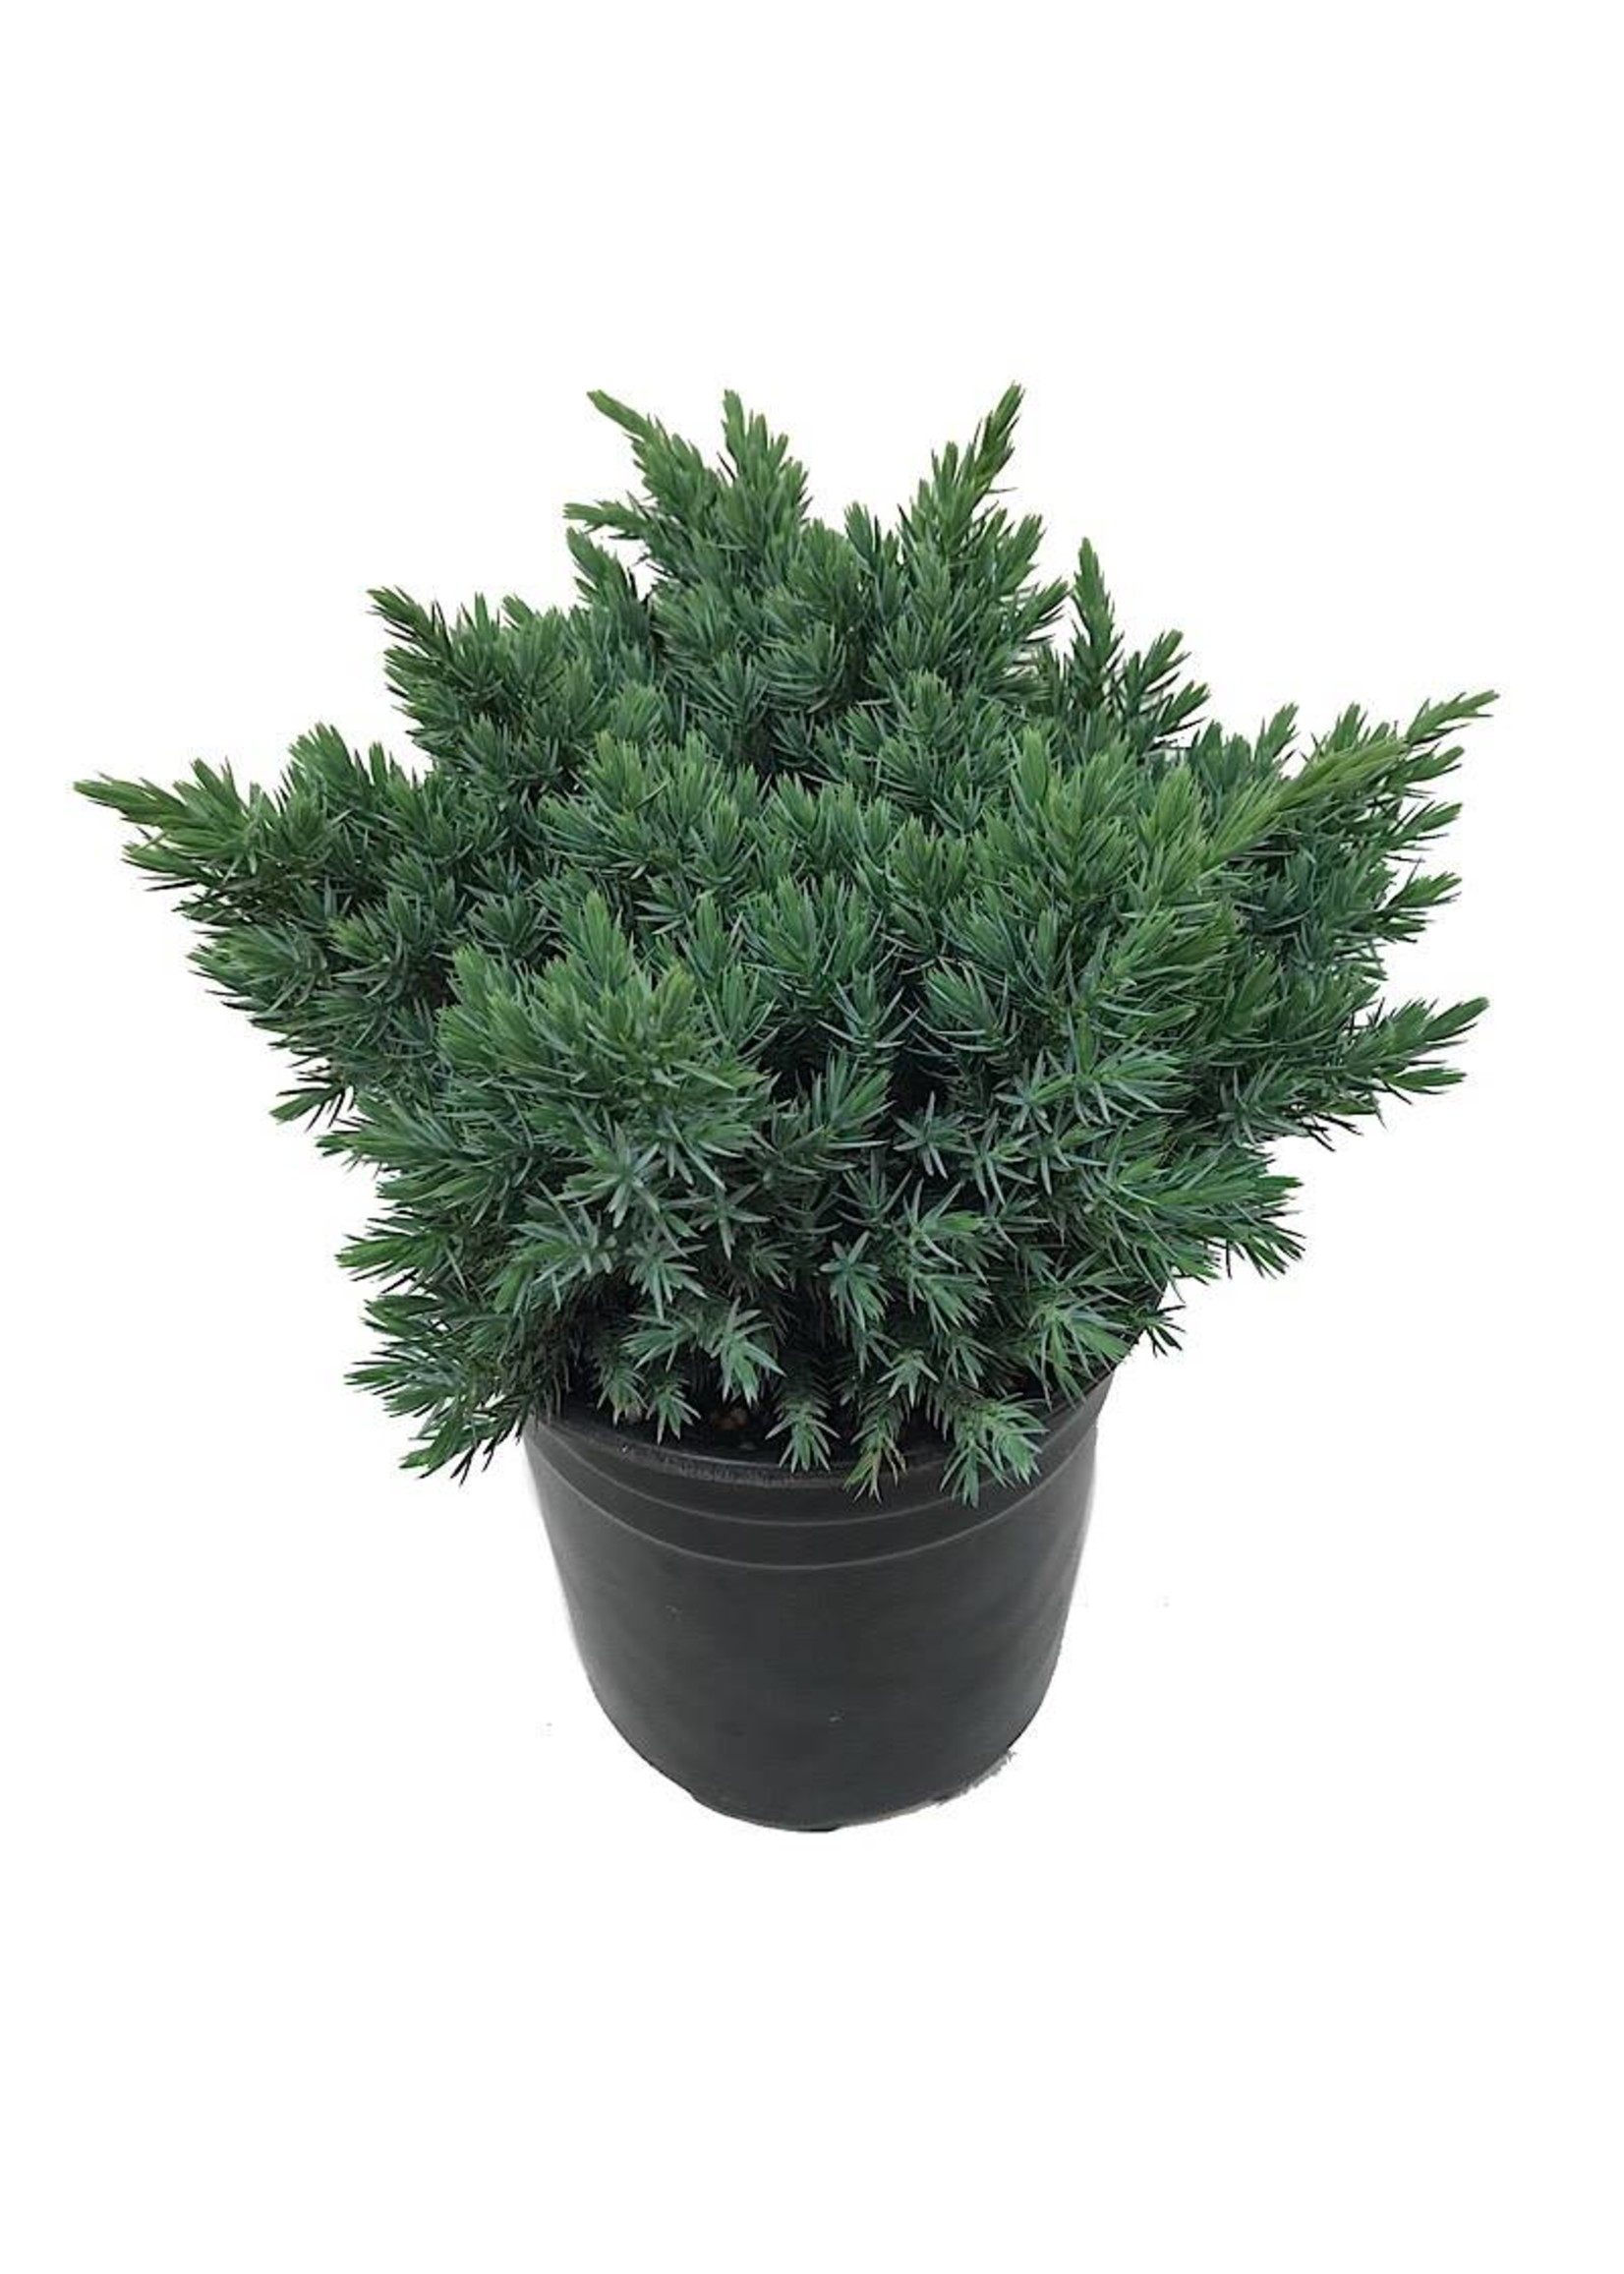 Juniperus squamata 'Blue Star' 1 Gallon